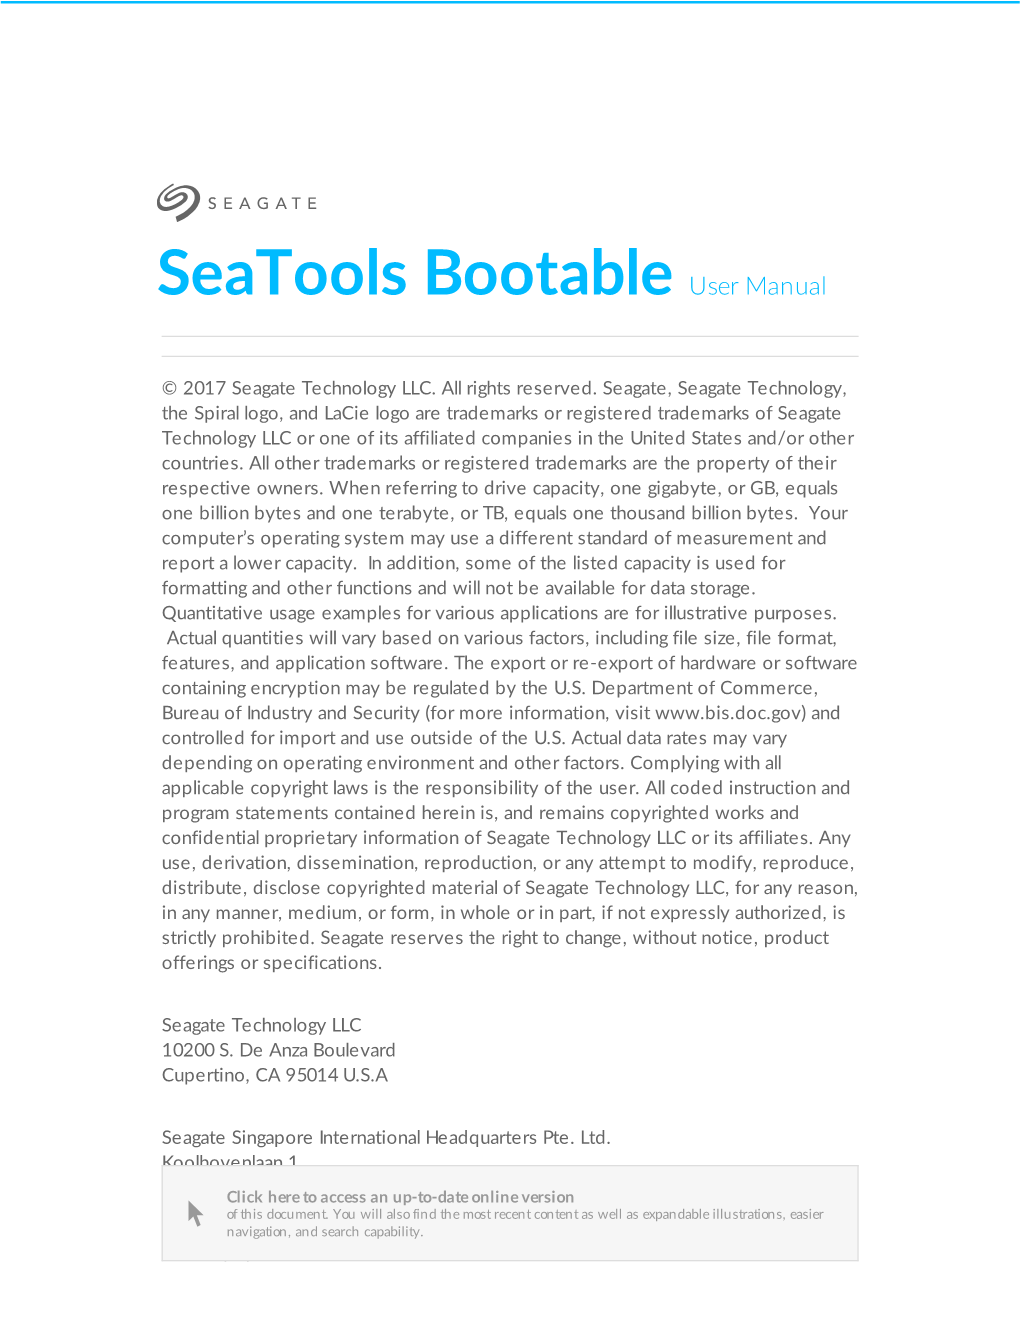 Seatools Bootable User Manual